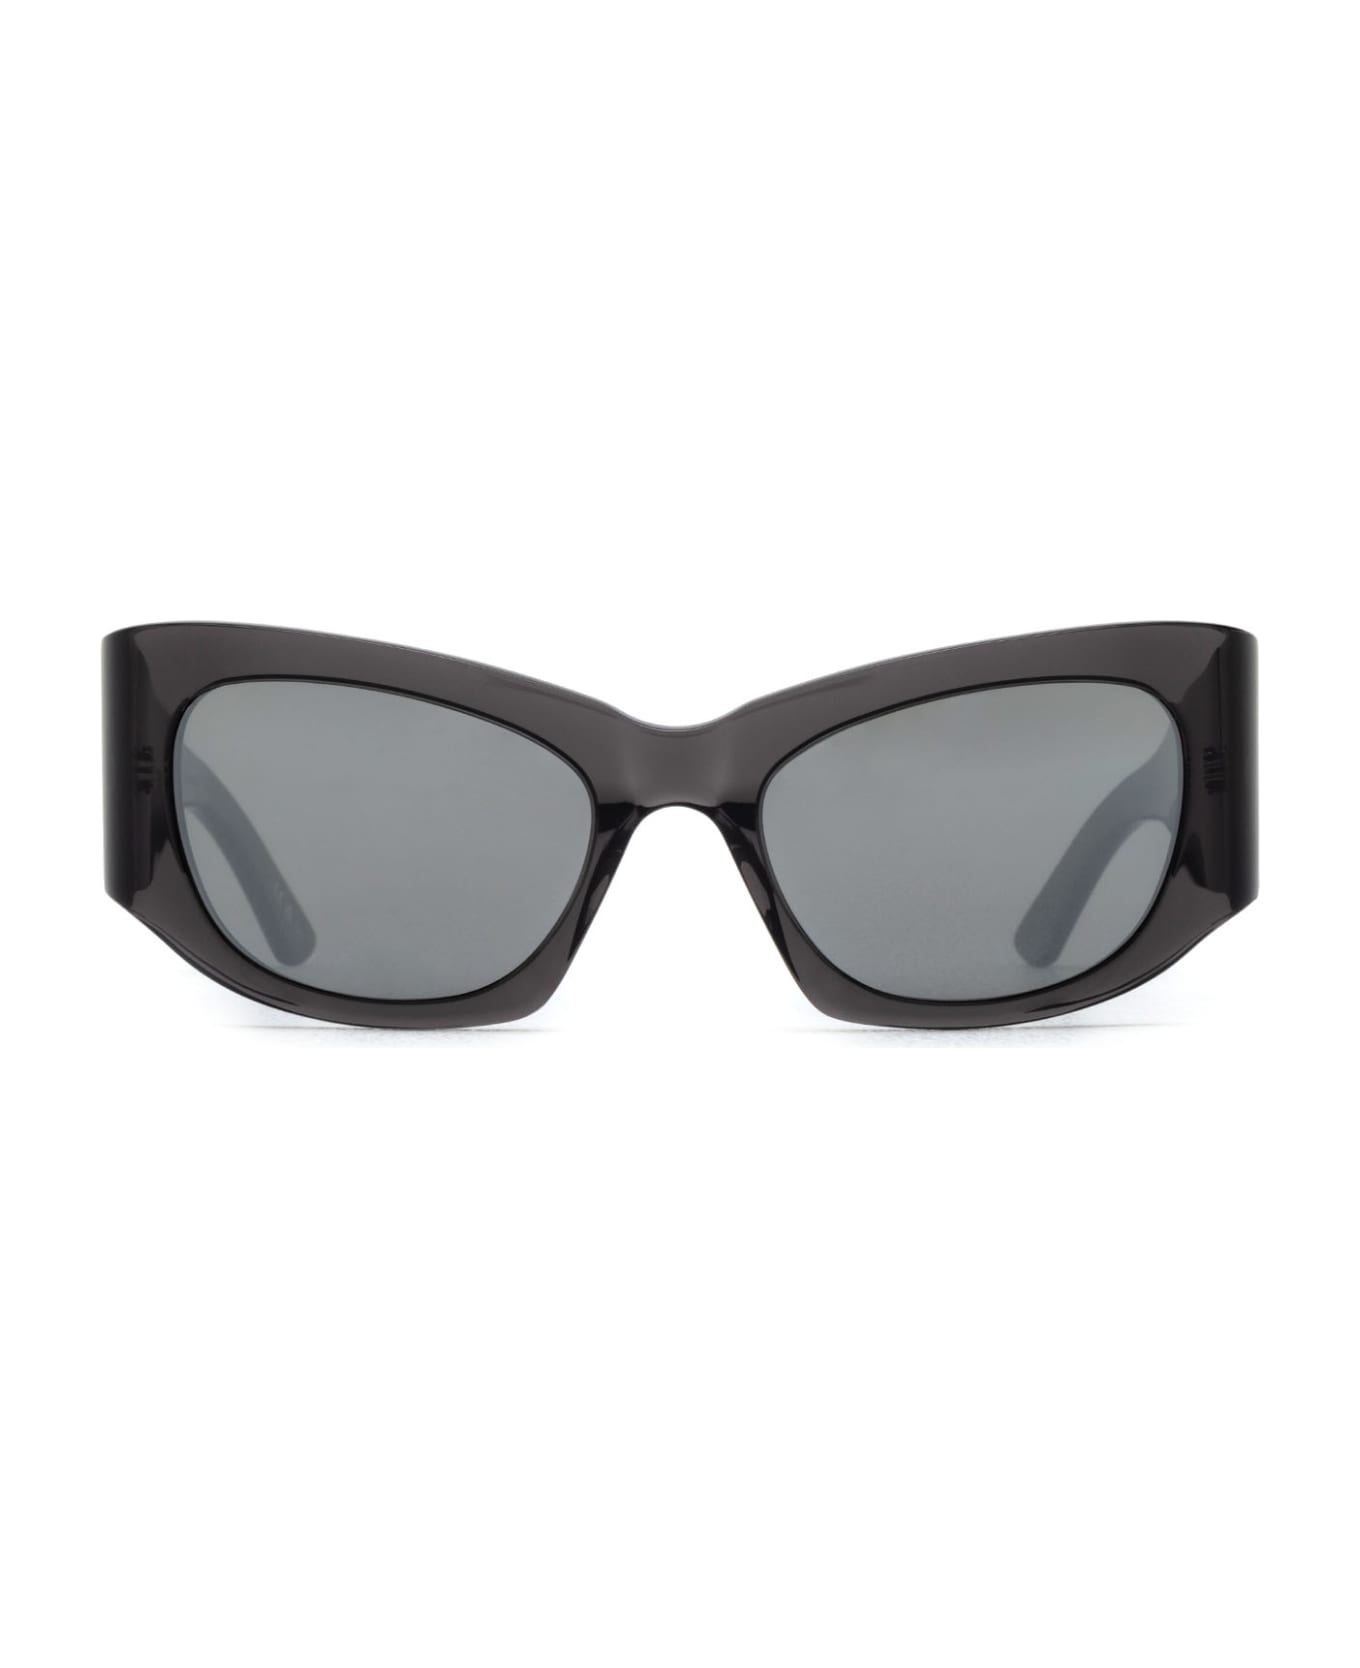 Balenciaga Eyewear Bb0327s Sunglasses - Grey